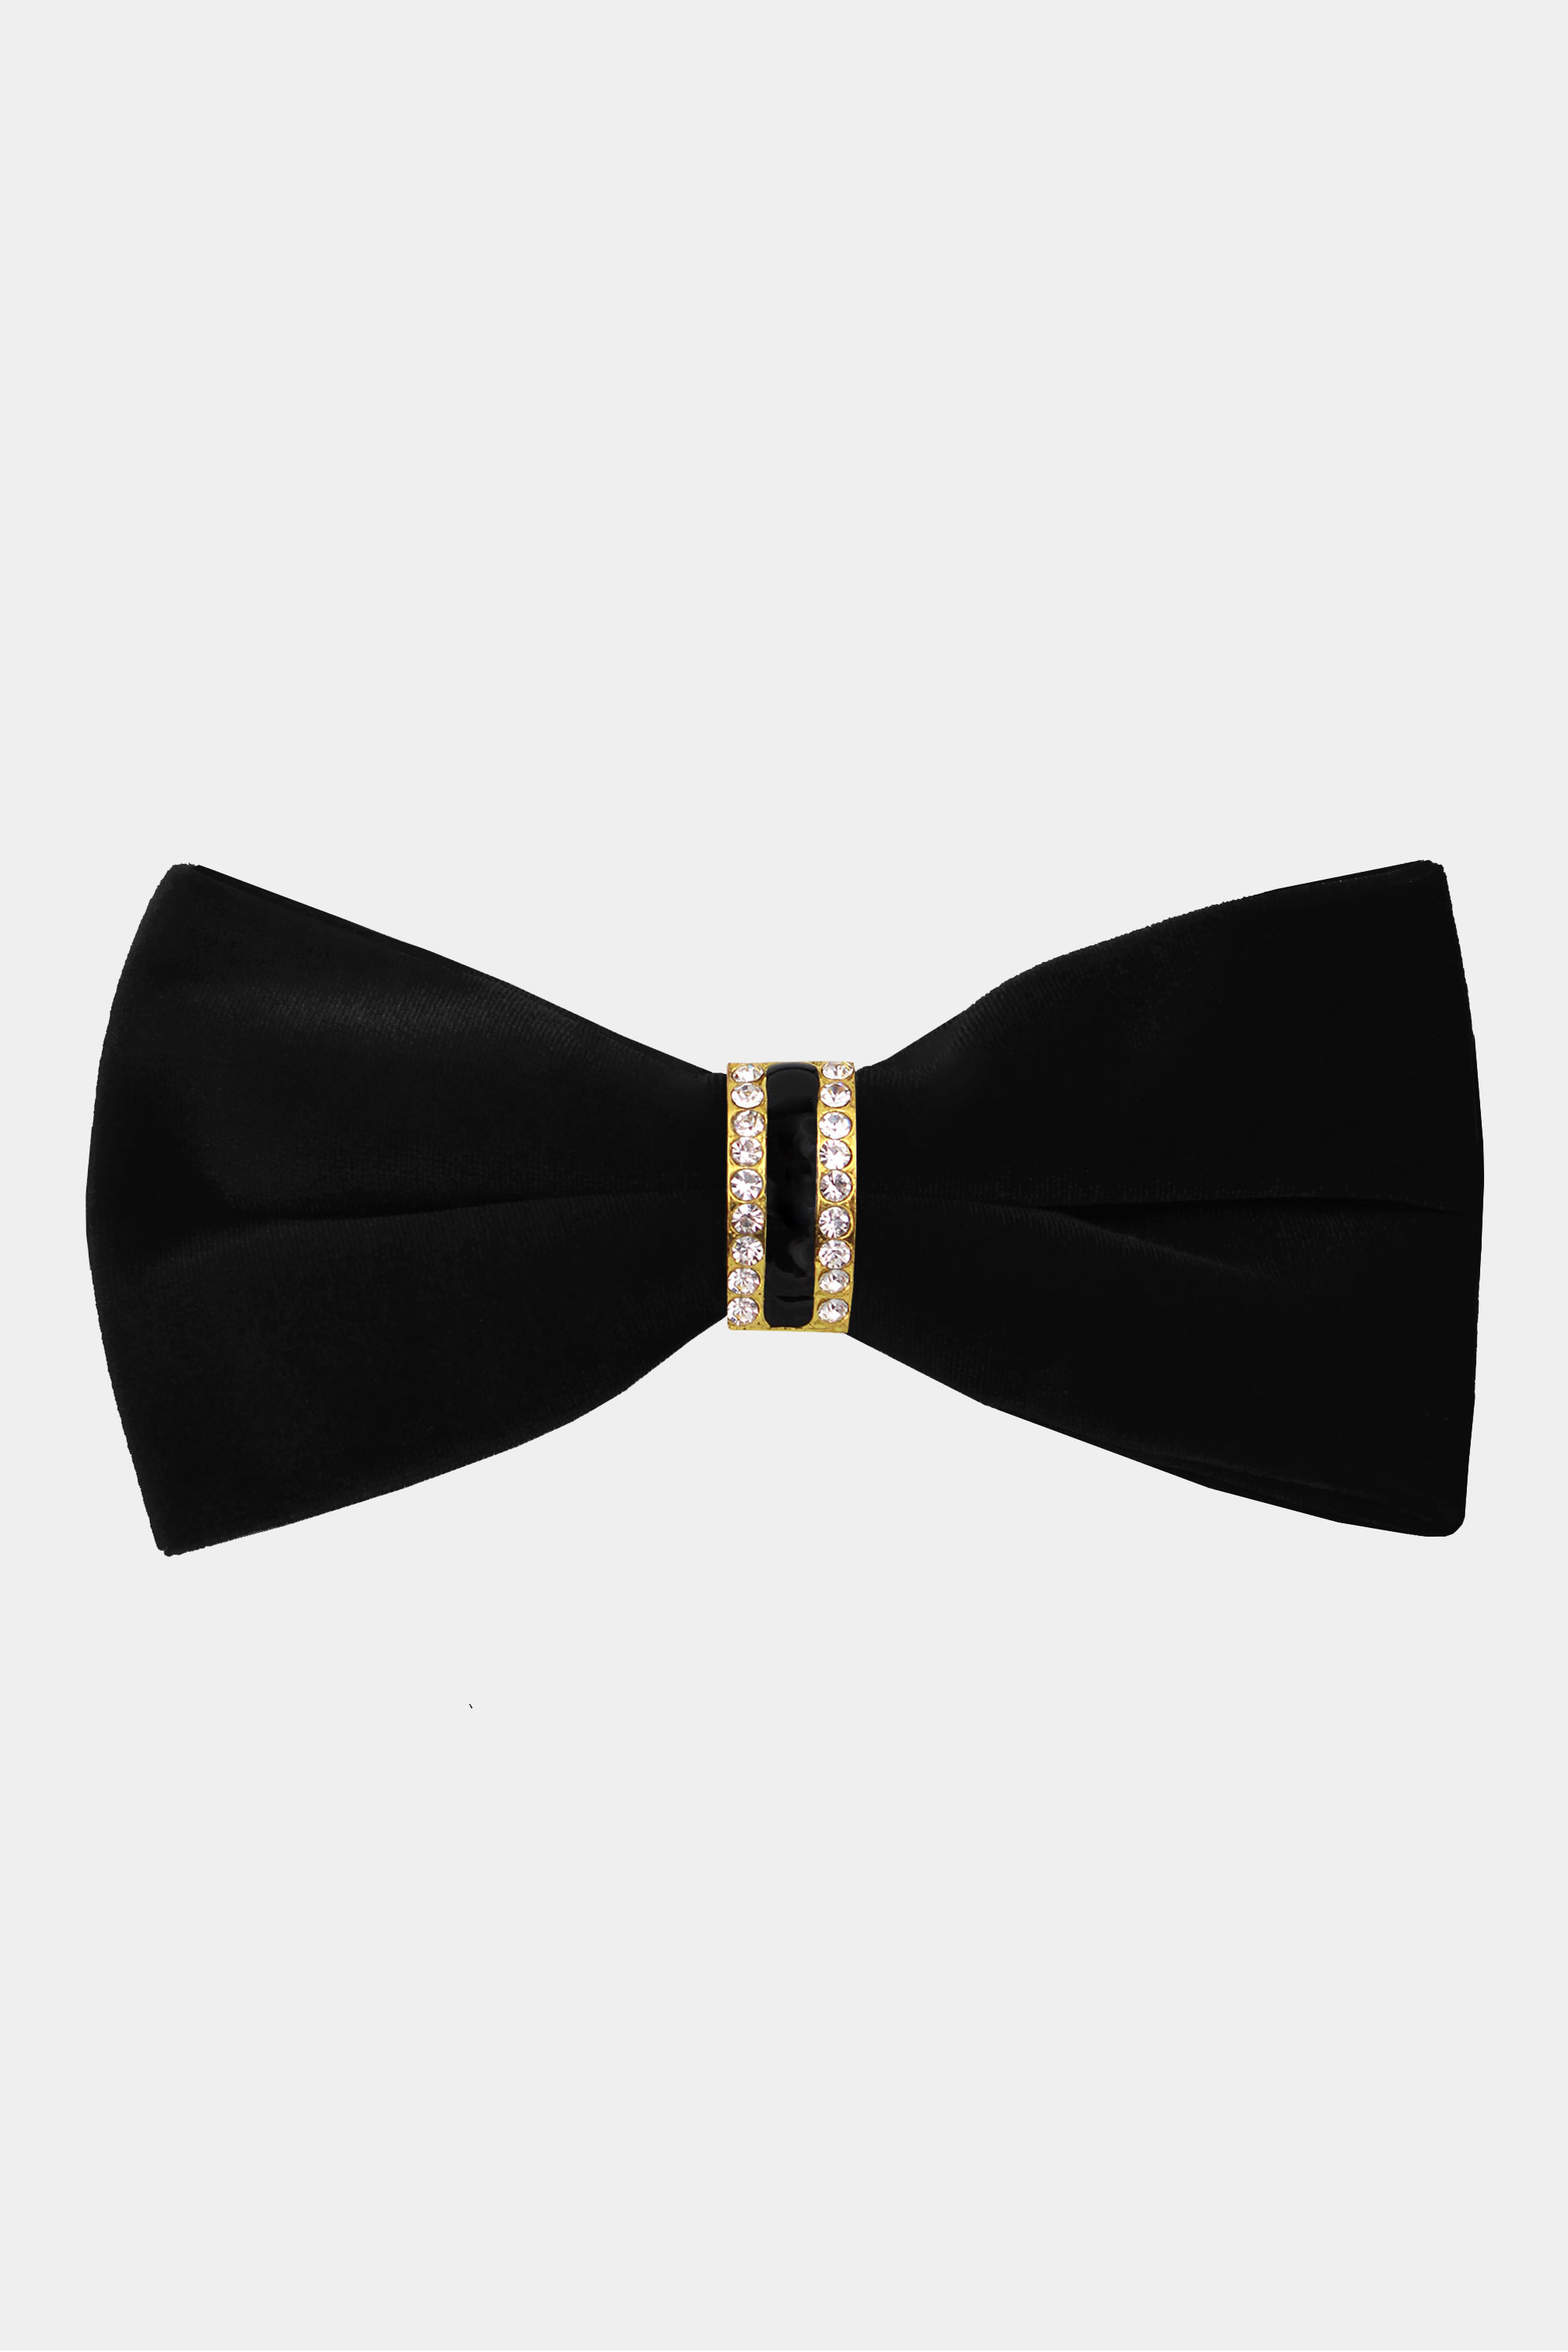 Mens-Black-Velvet-Bow-Tie-Crystal-Luxury-Fancy-Bowtie-from-Gentlemansguru.com